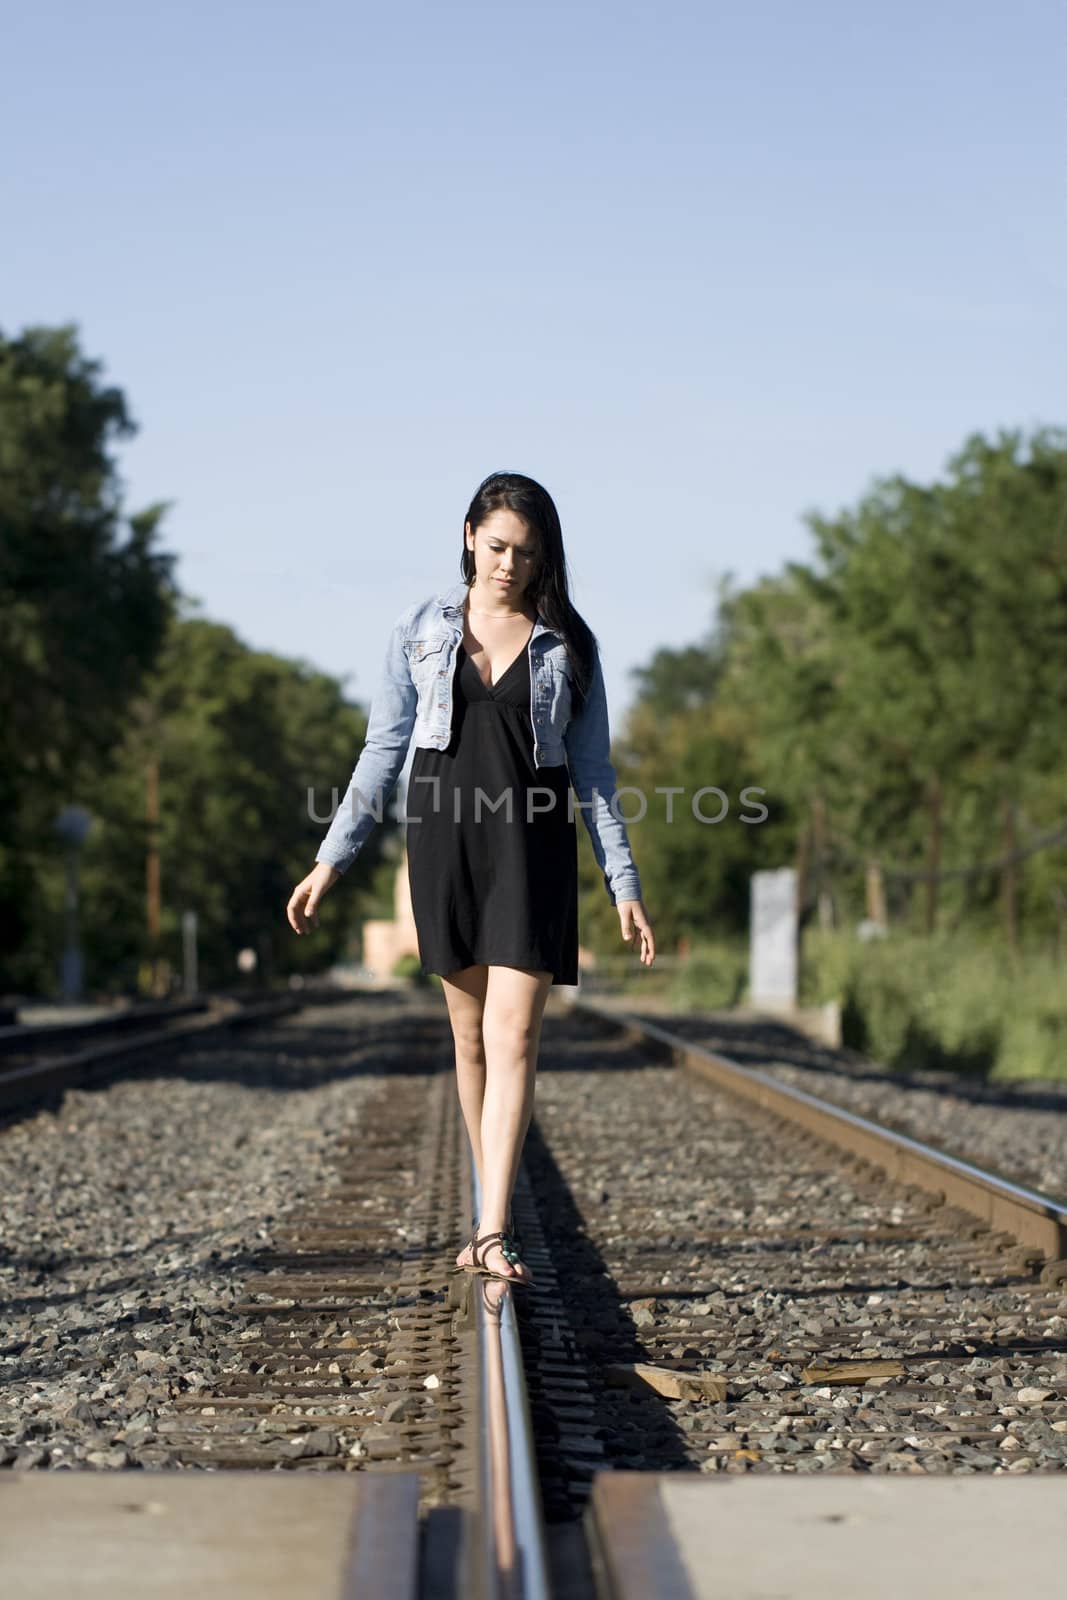 Pretty teen walking alone on train tracks on a beautiful day